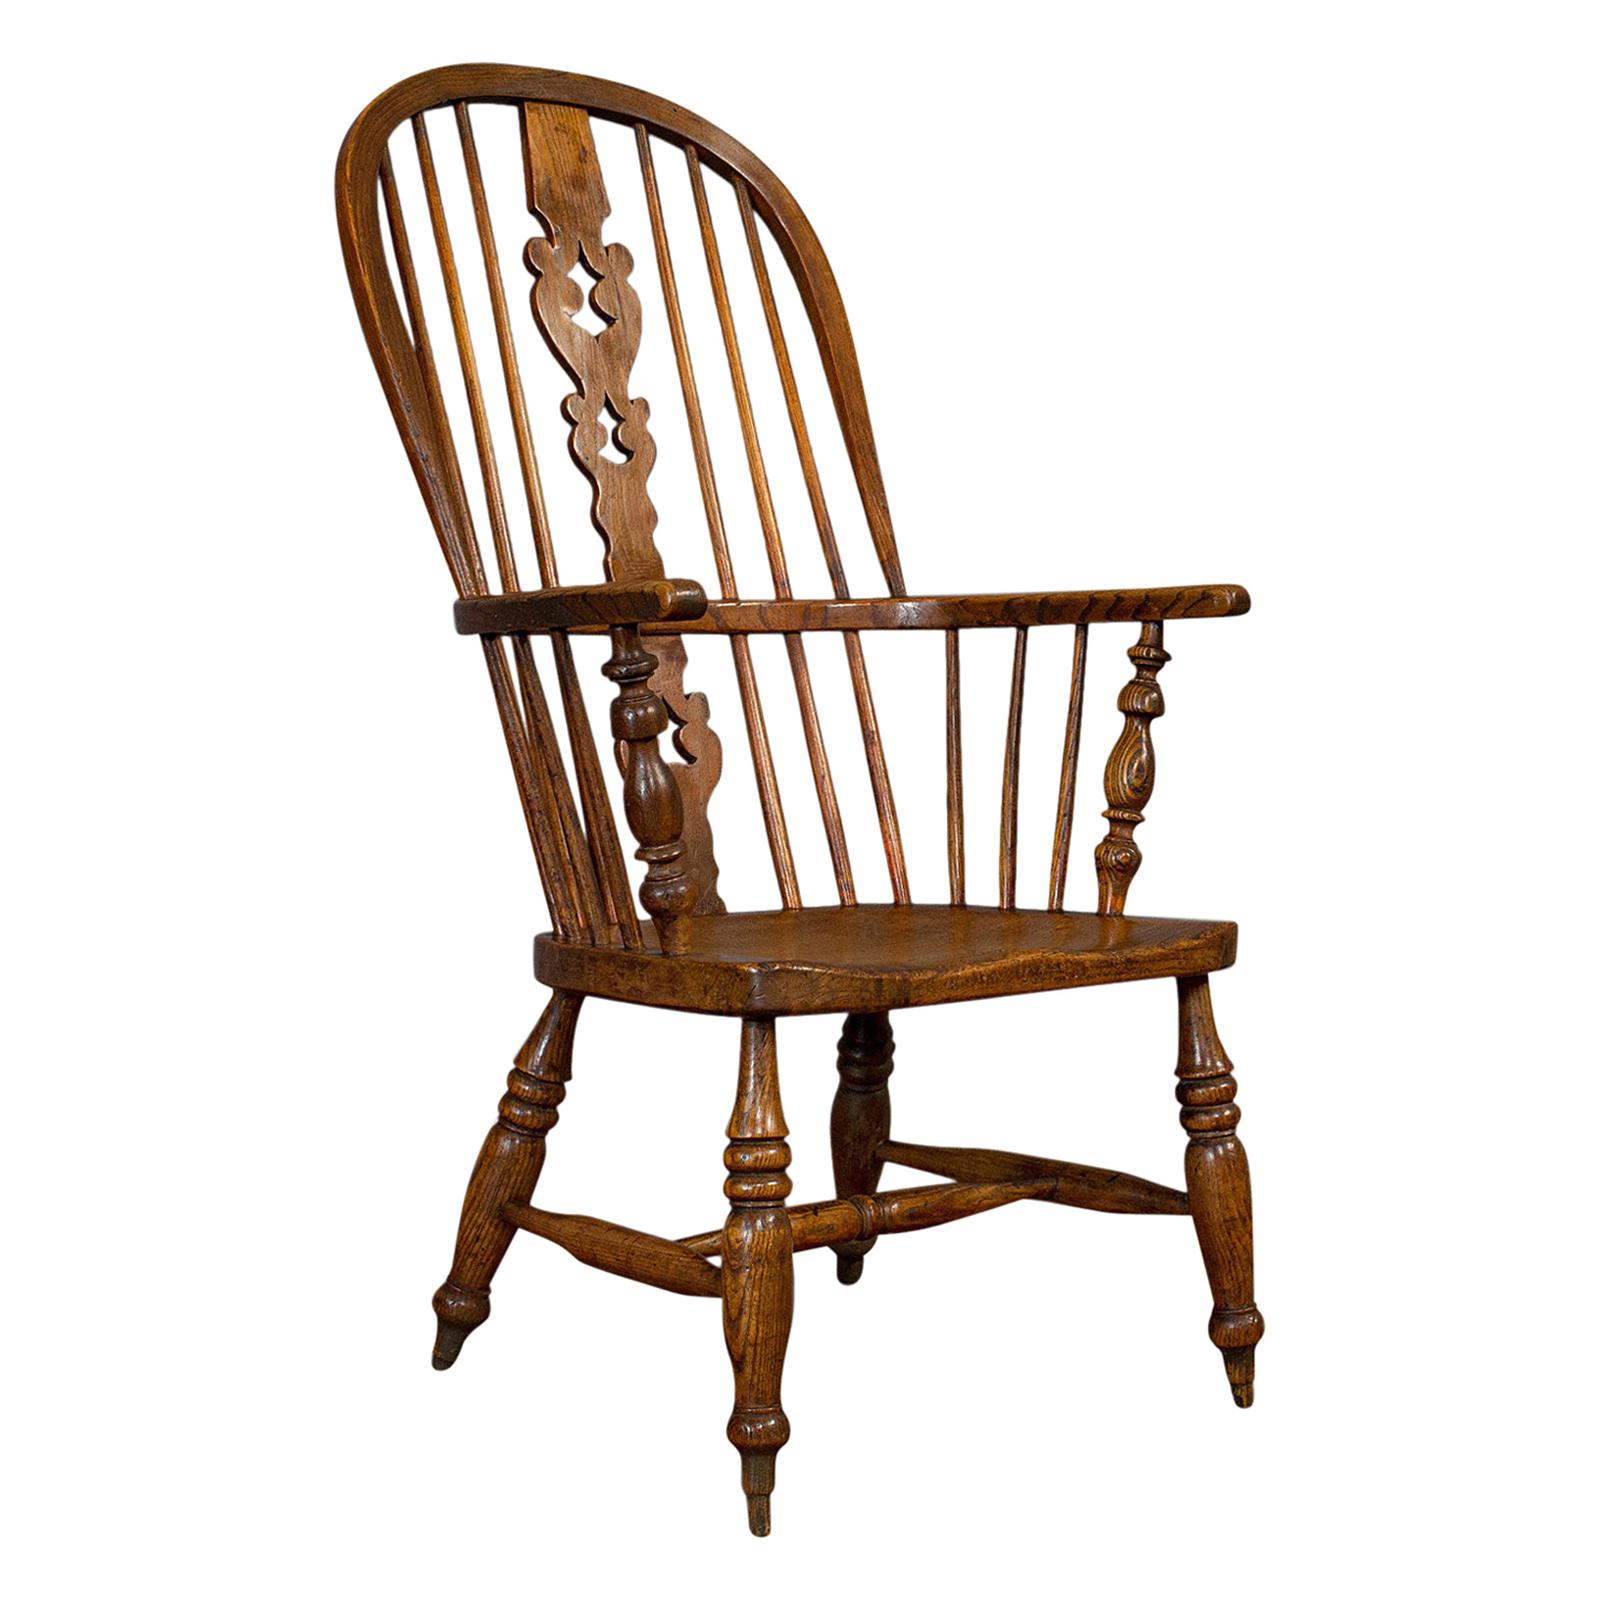 Antique Windsor Chair, British, Elm, Ash, Elbow, Armchair, Victorian, circa 1860